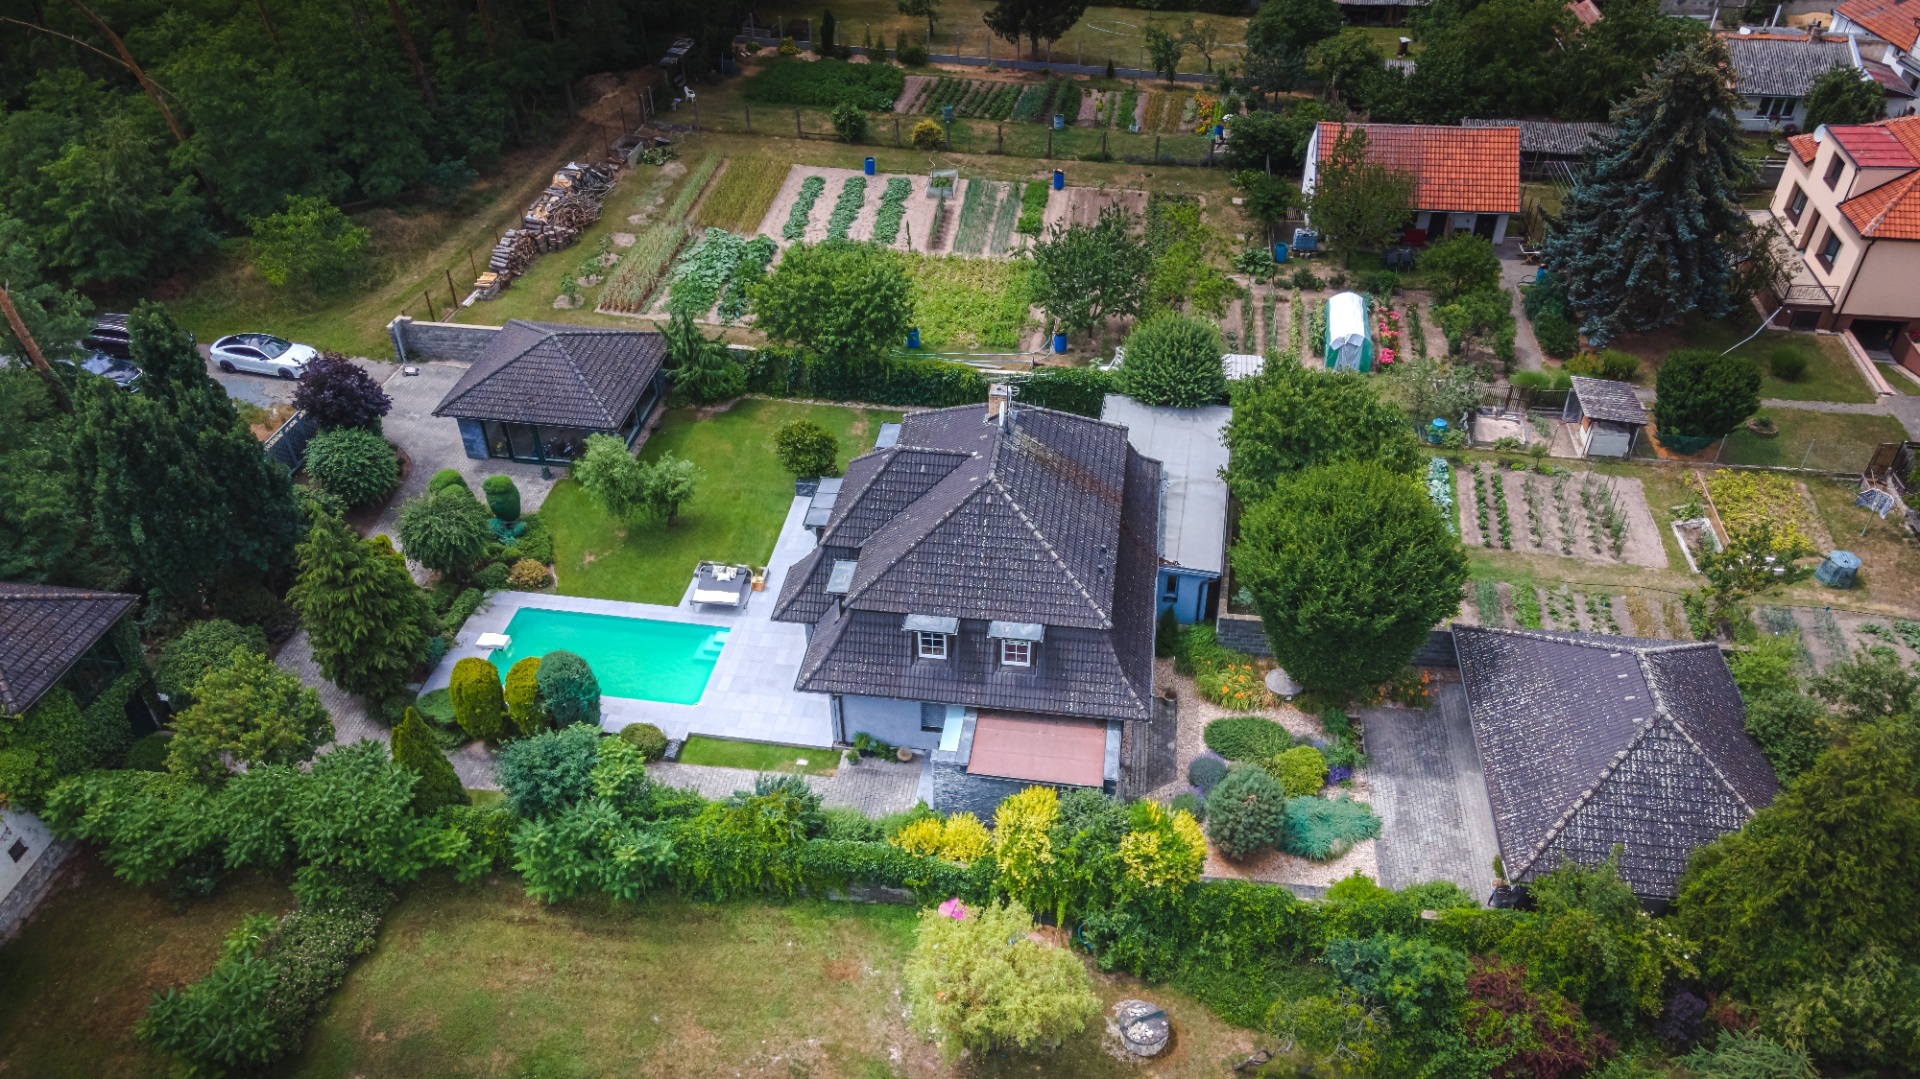 Prodej, Rodinný dům s okrasnou zahradou a bazénem 250  m² - Písková Lhota